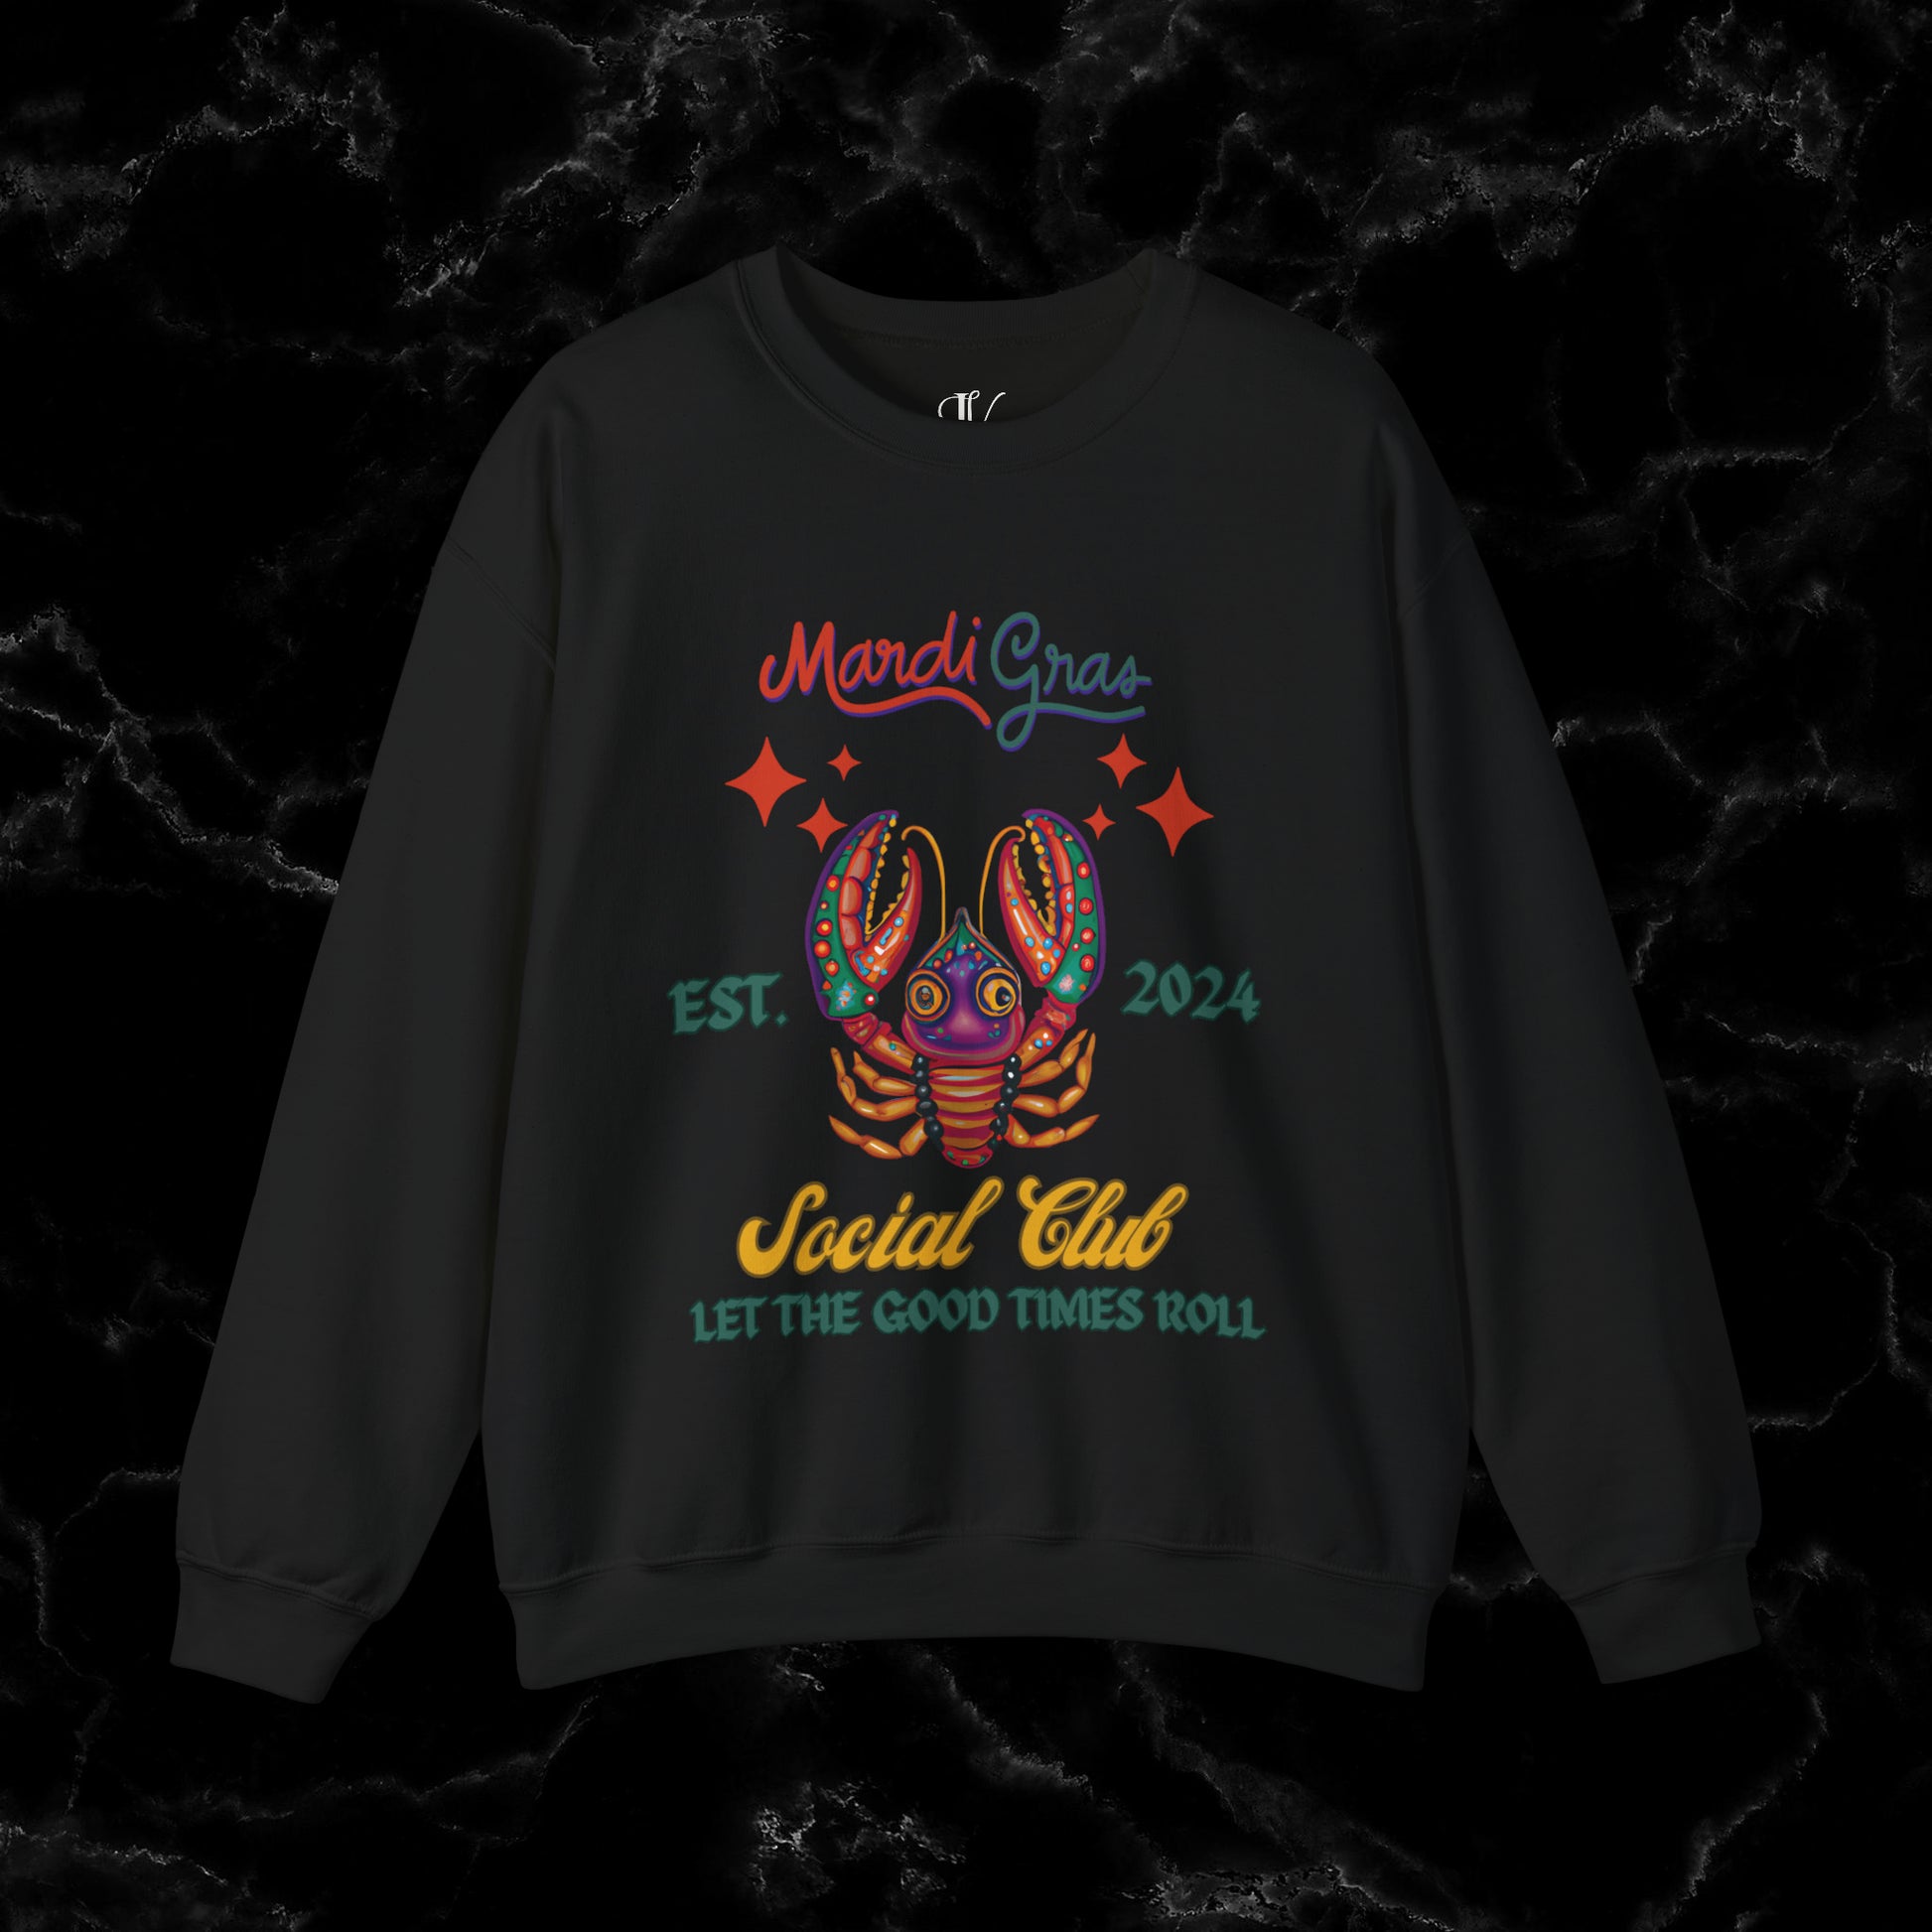 Mardi Gras Sweatshirt Women - NOLA Luxury Bachelorette Sweater, Unique Fat Tuesday Shirt, Louisiana Girls Trip Sweater, Mardi Gras Social Club Style Sweatshirt S Black 